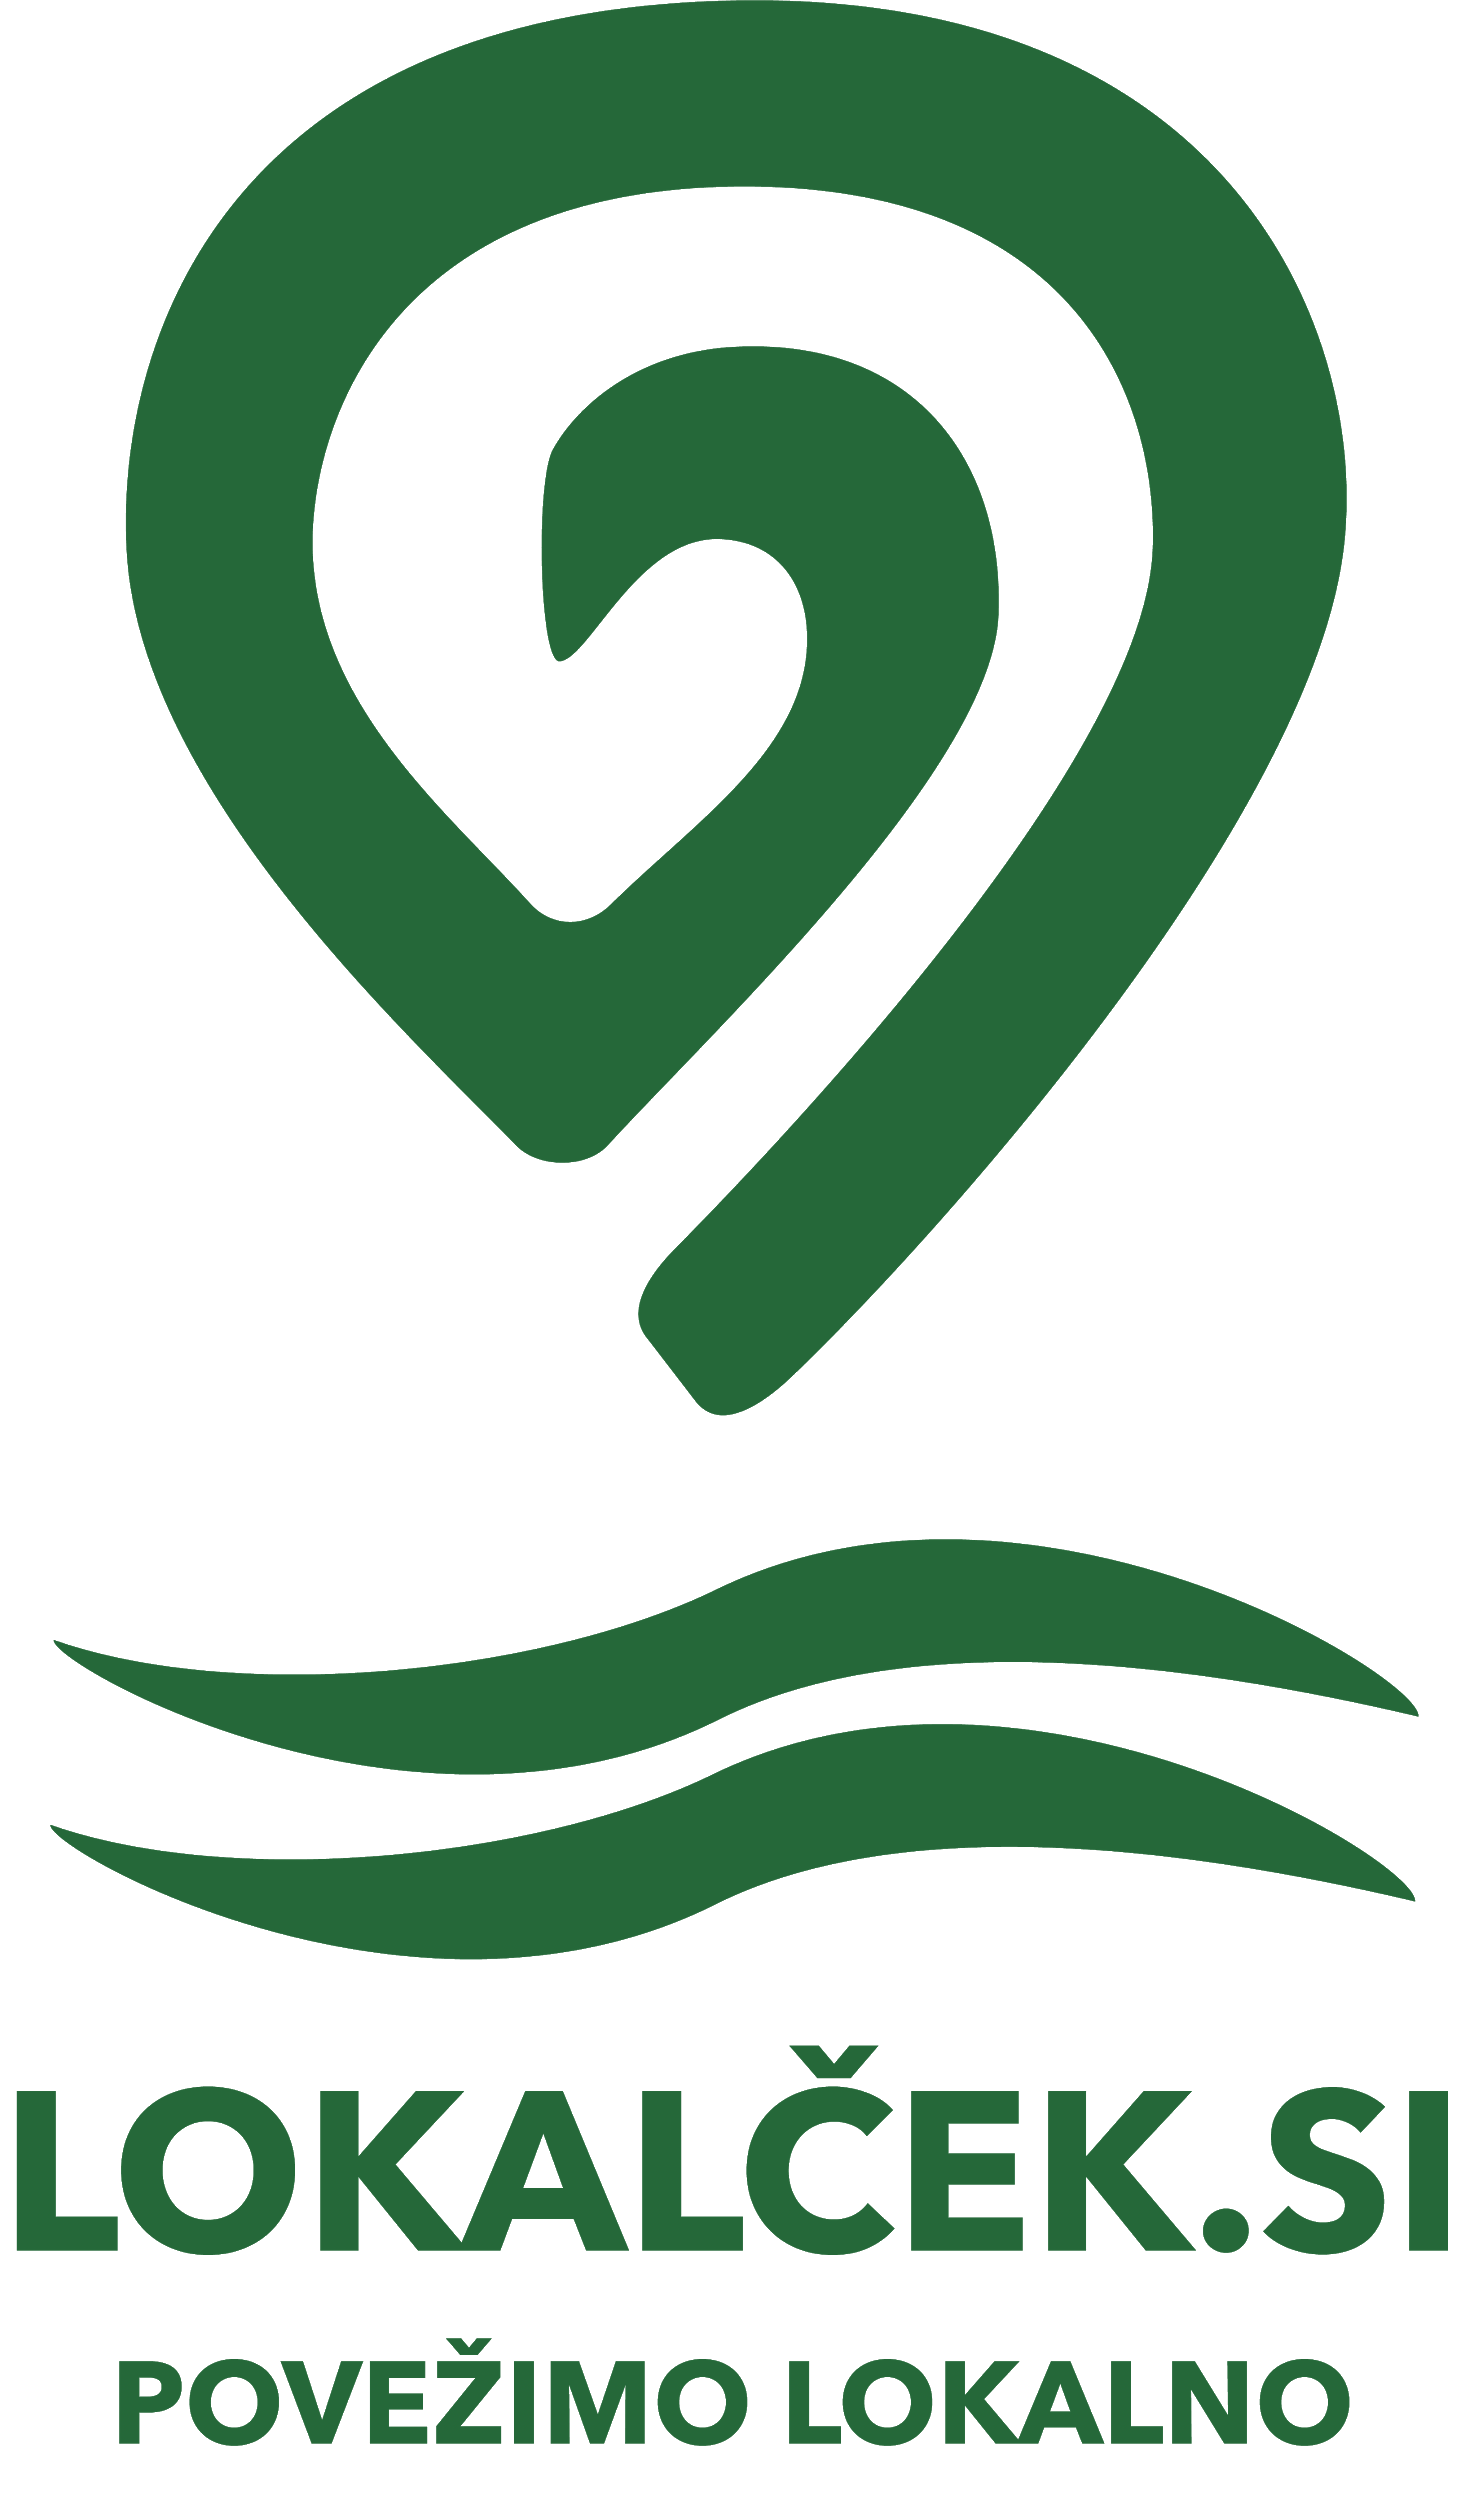 Lokalček.si - logo.png